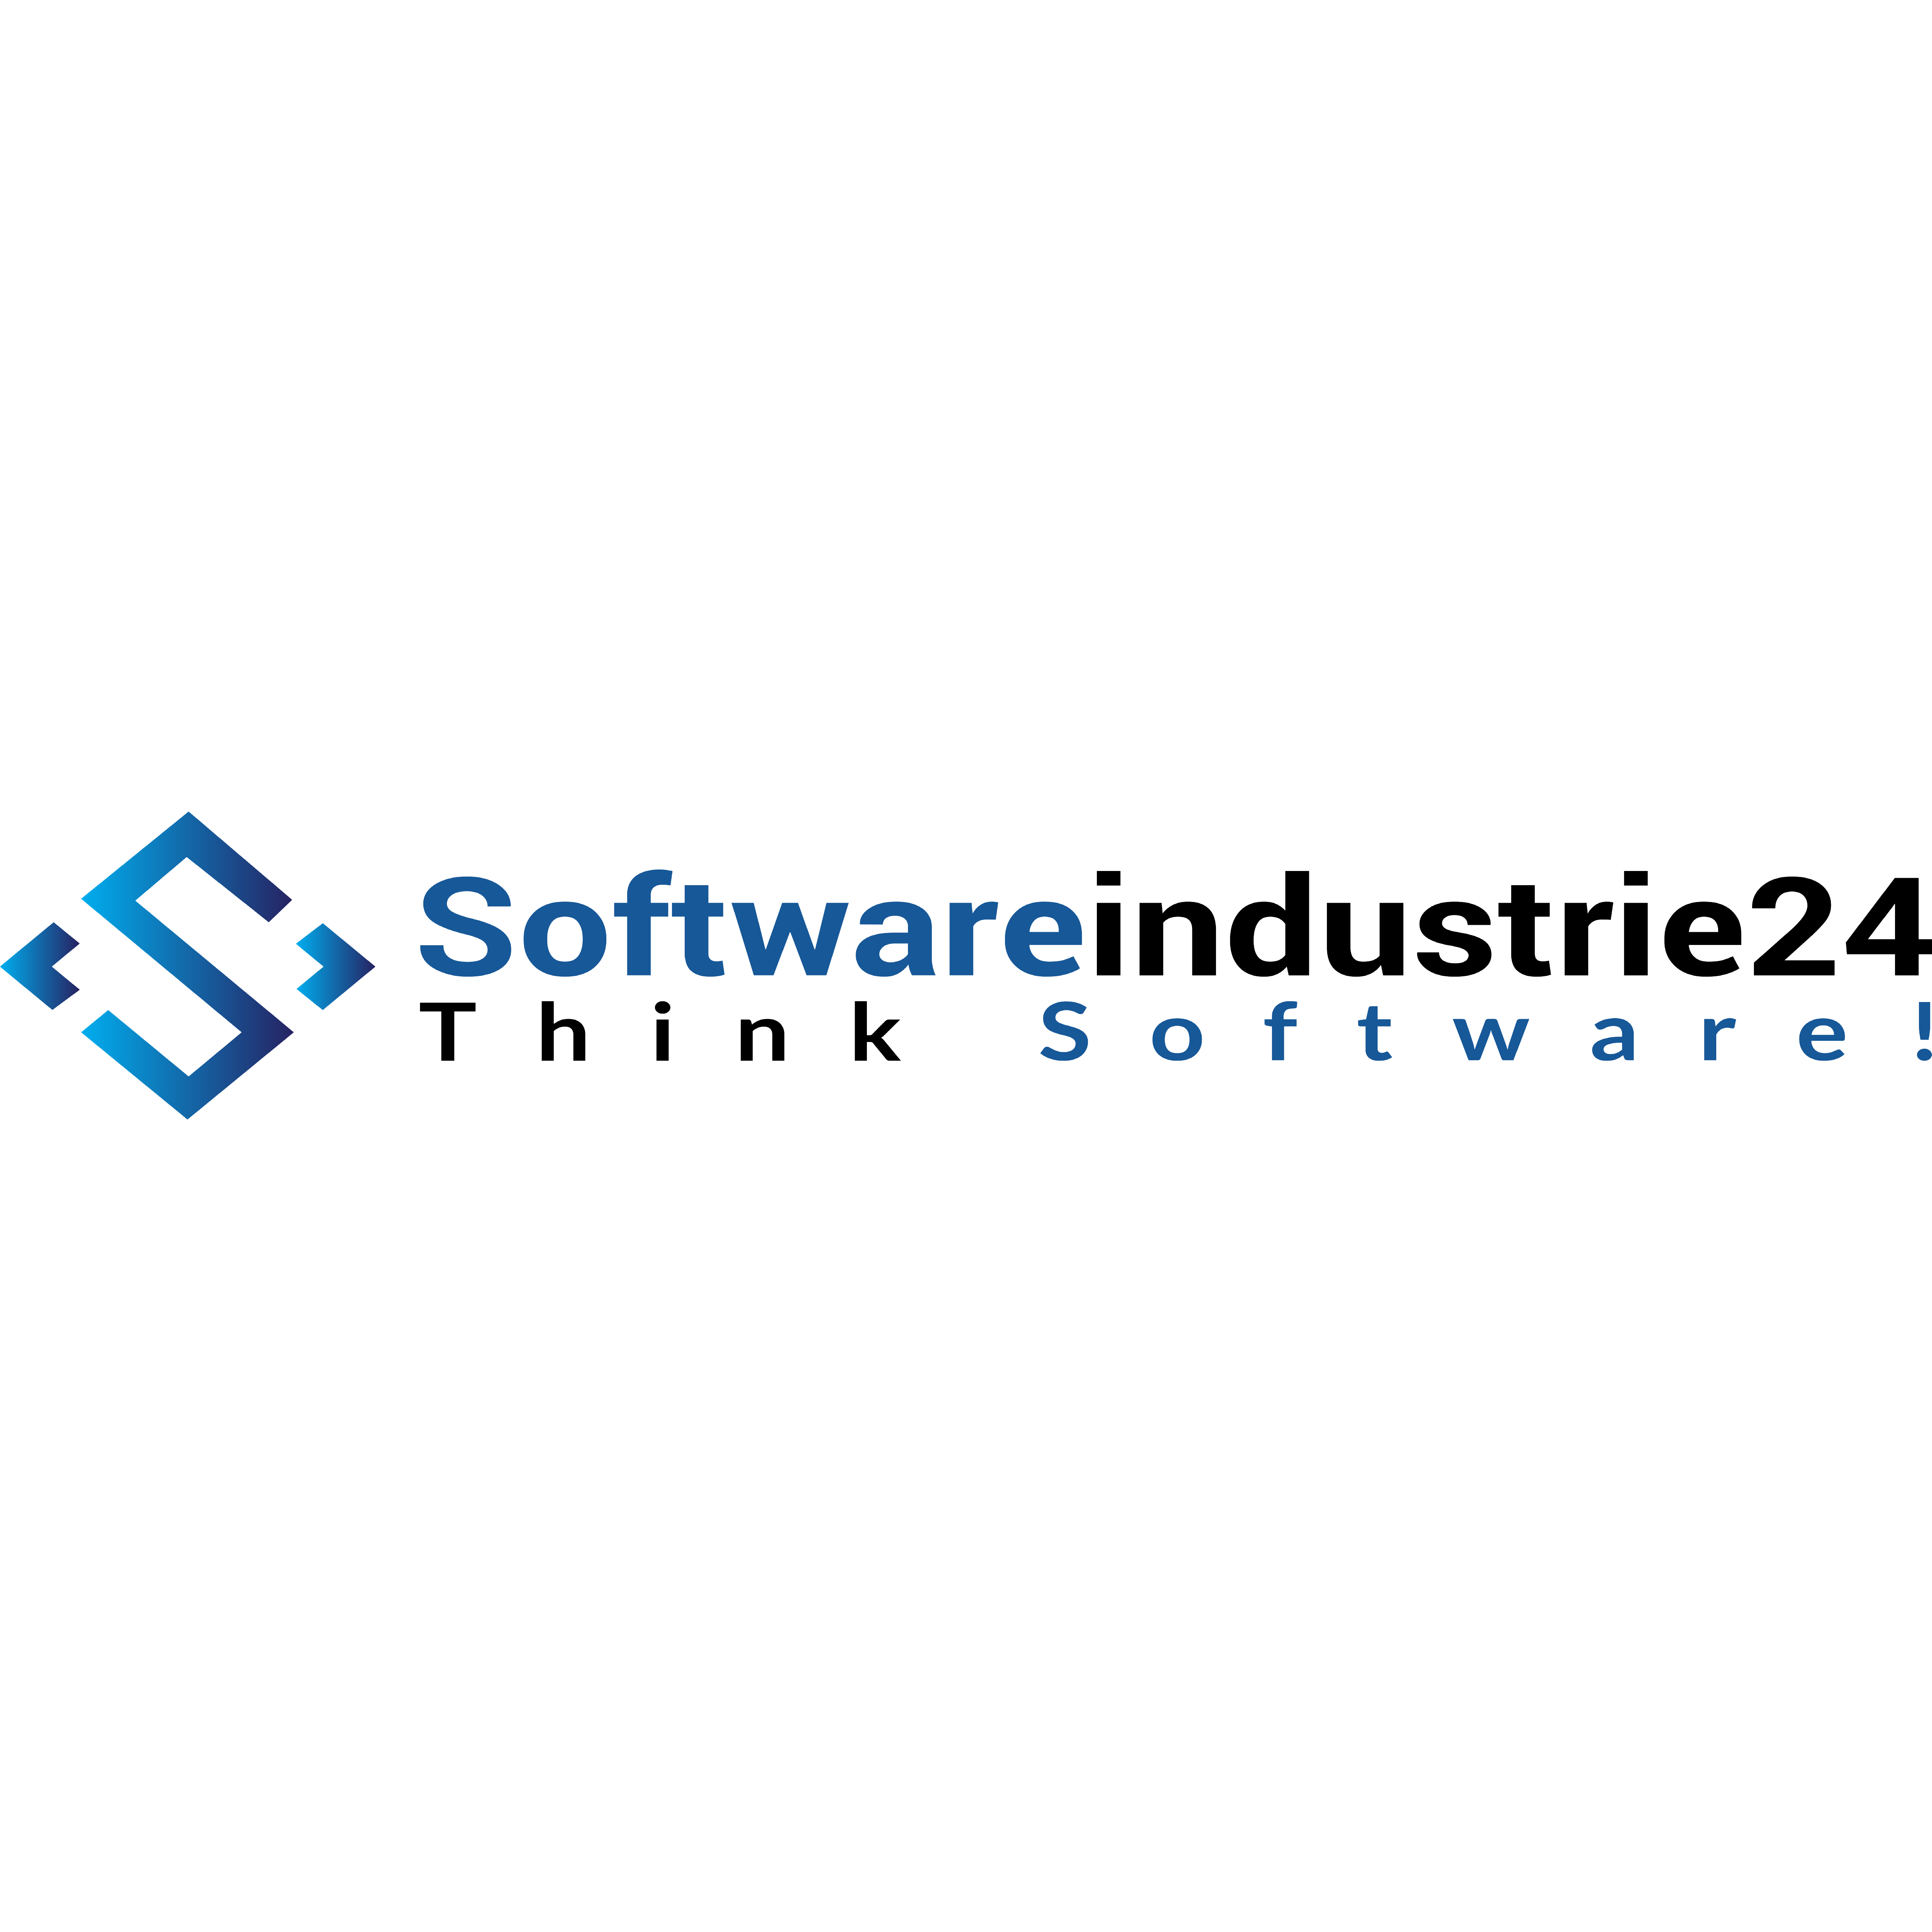 Softwareindustrie24 in Sibbesse - Logo